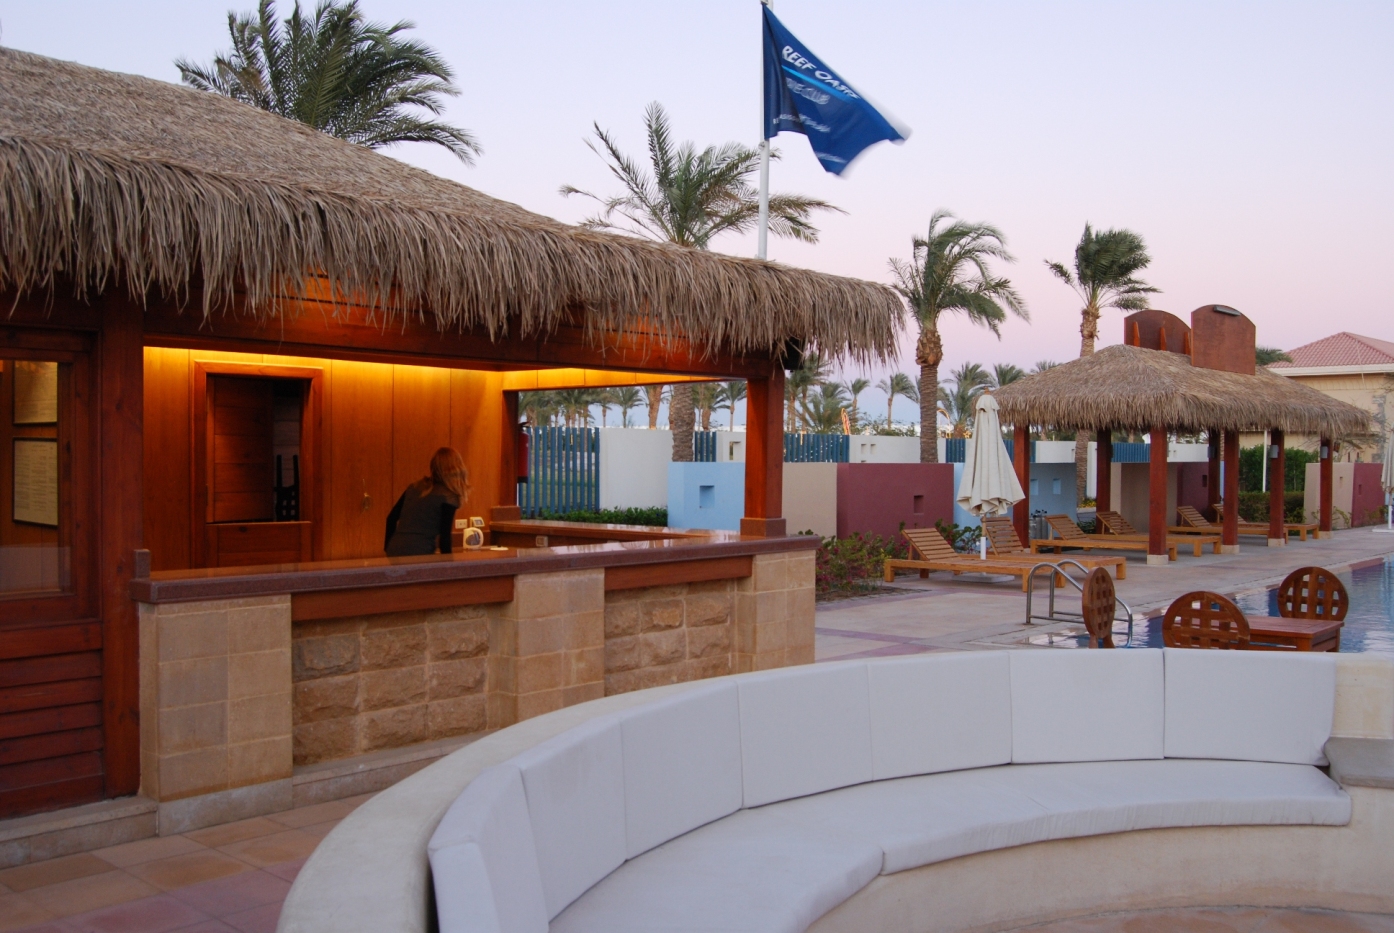 Reef Oasis Dive Club Sharm dive-centers-in-sharm-el-sheikh-342195567771o.jpg